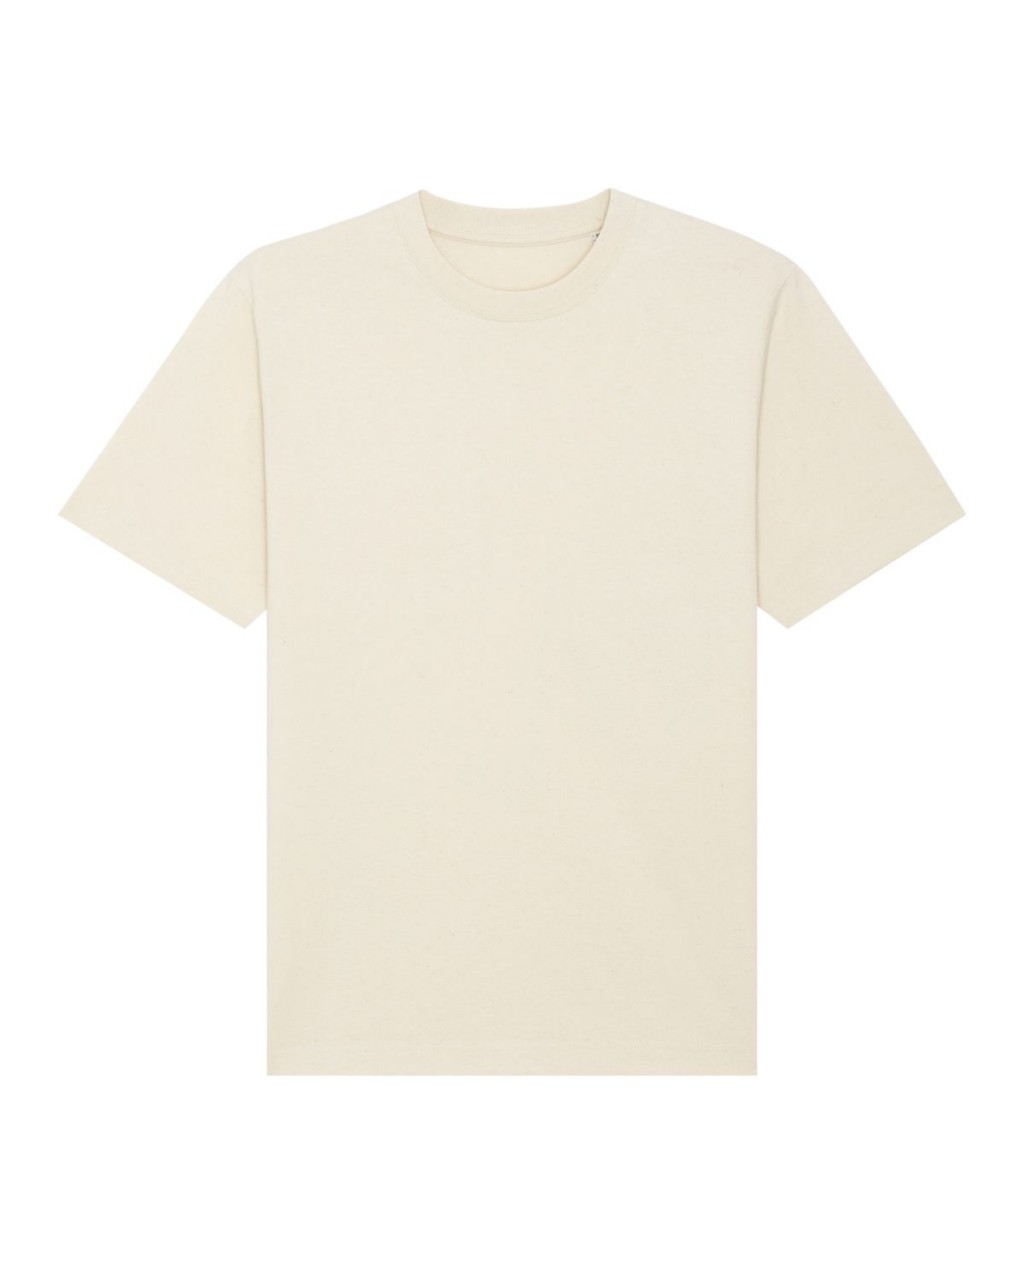 MS Oversized Heavy T-Shirt natural raw - gw Basics - HERREN | T-Shirts | Unifarben & Streifen